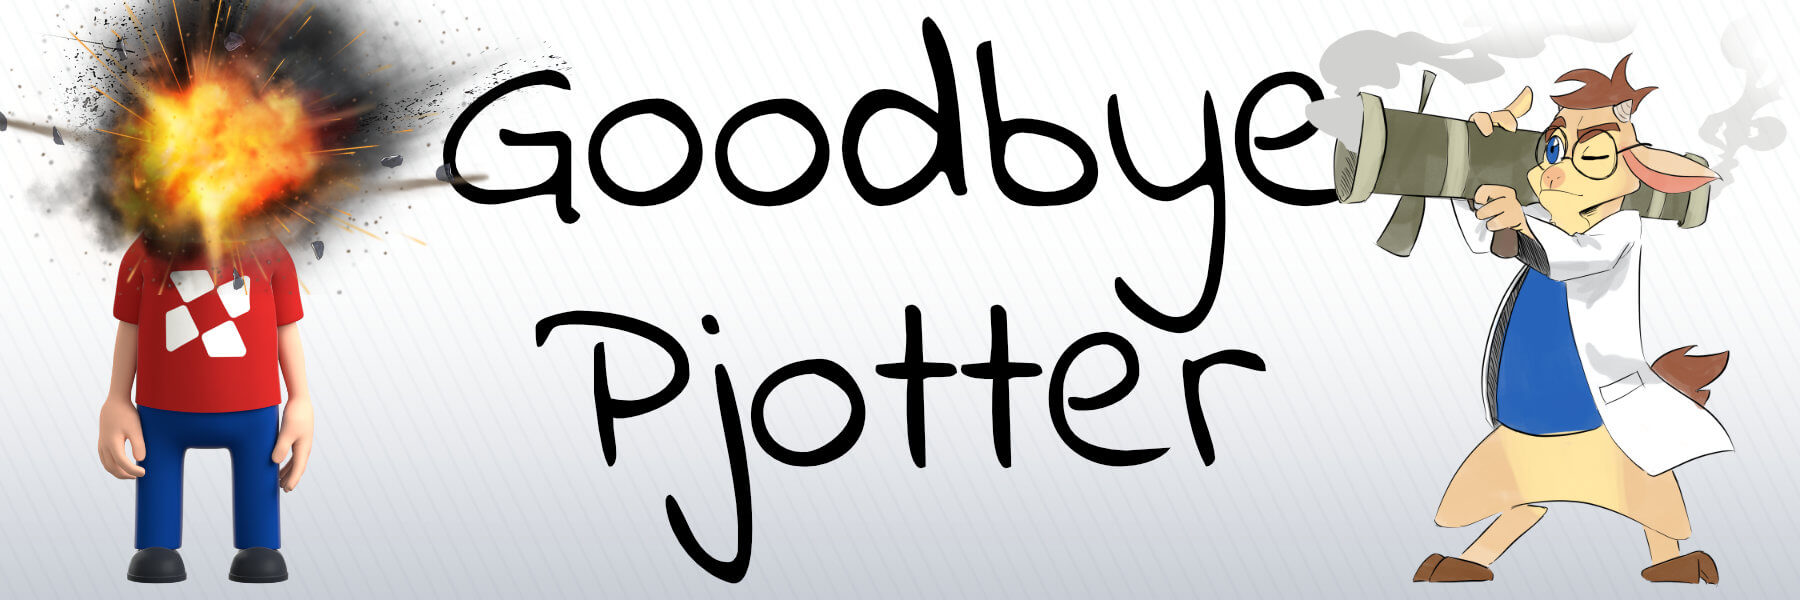 Goodbye Pjotter